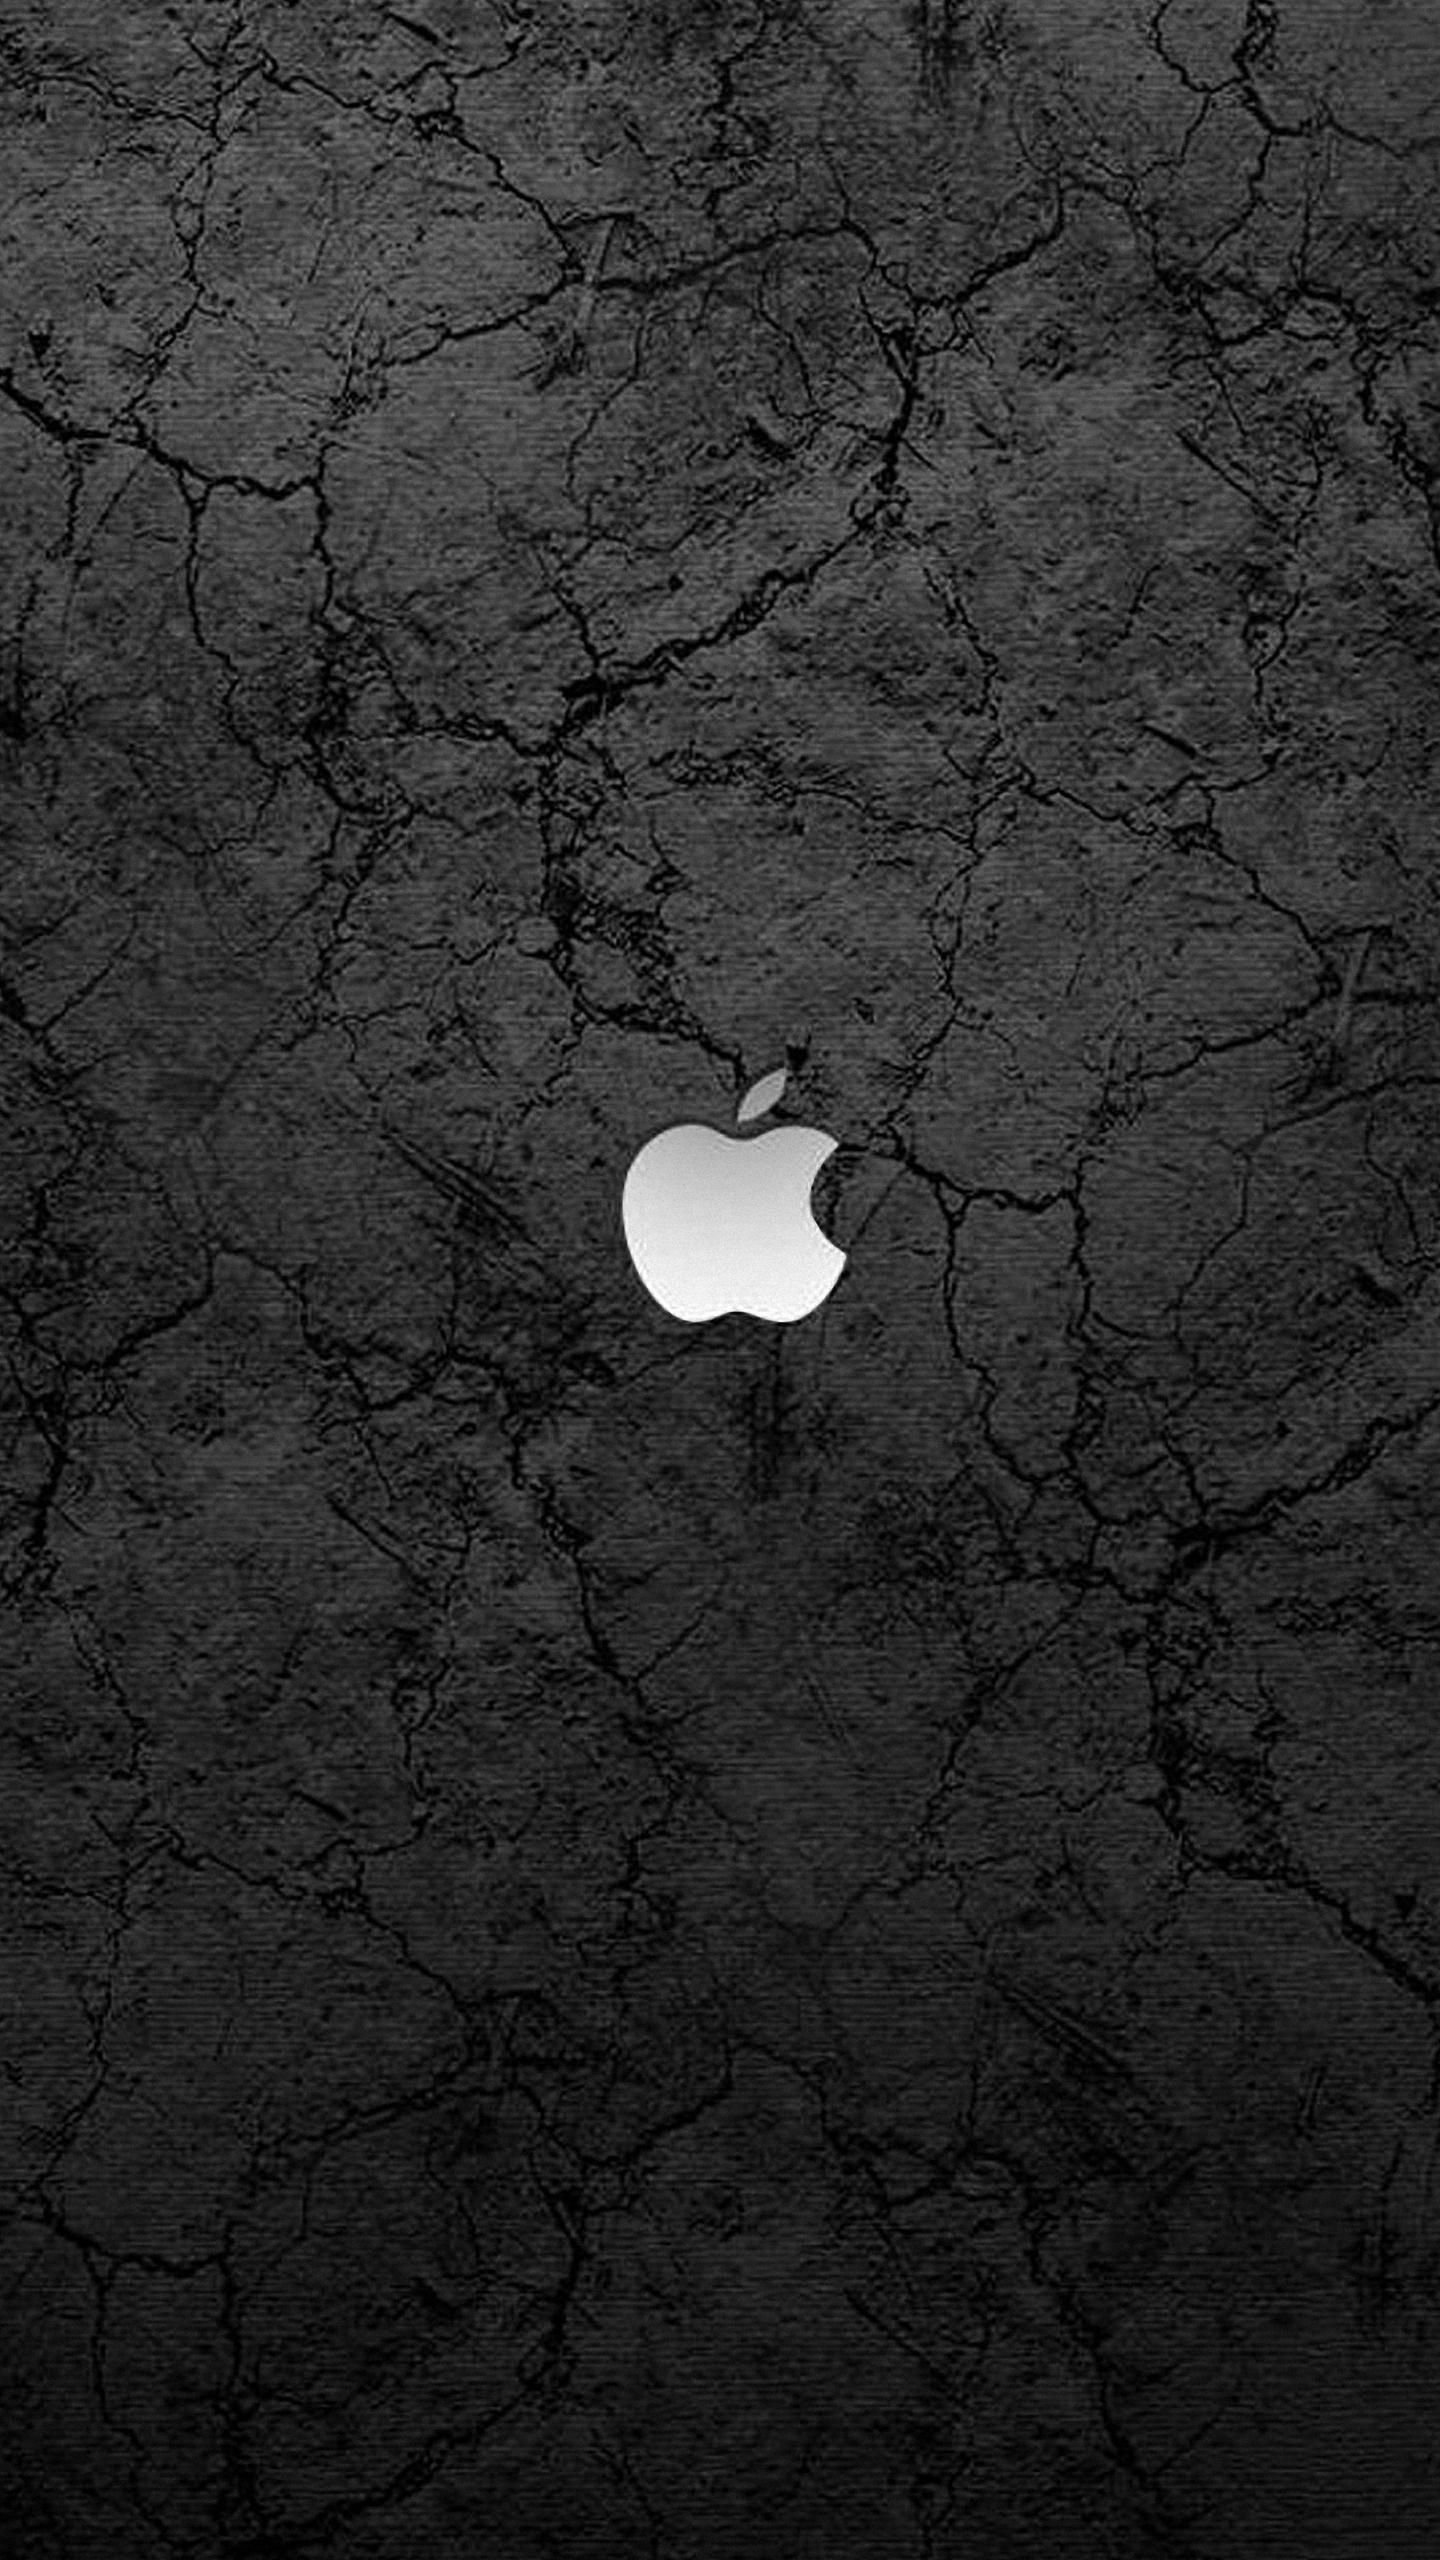 4k Wallpaper iPhone DarkD Wallpaper. Black apple wallpaper, Apple wallpaper iphone, Black and white wallpaper iphone